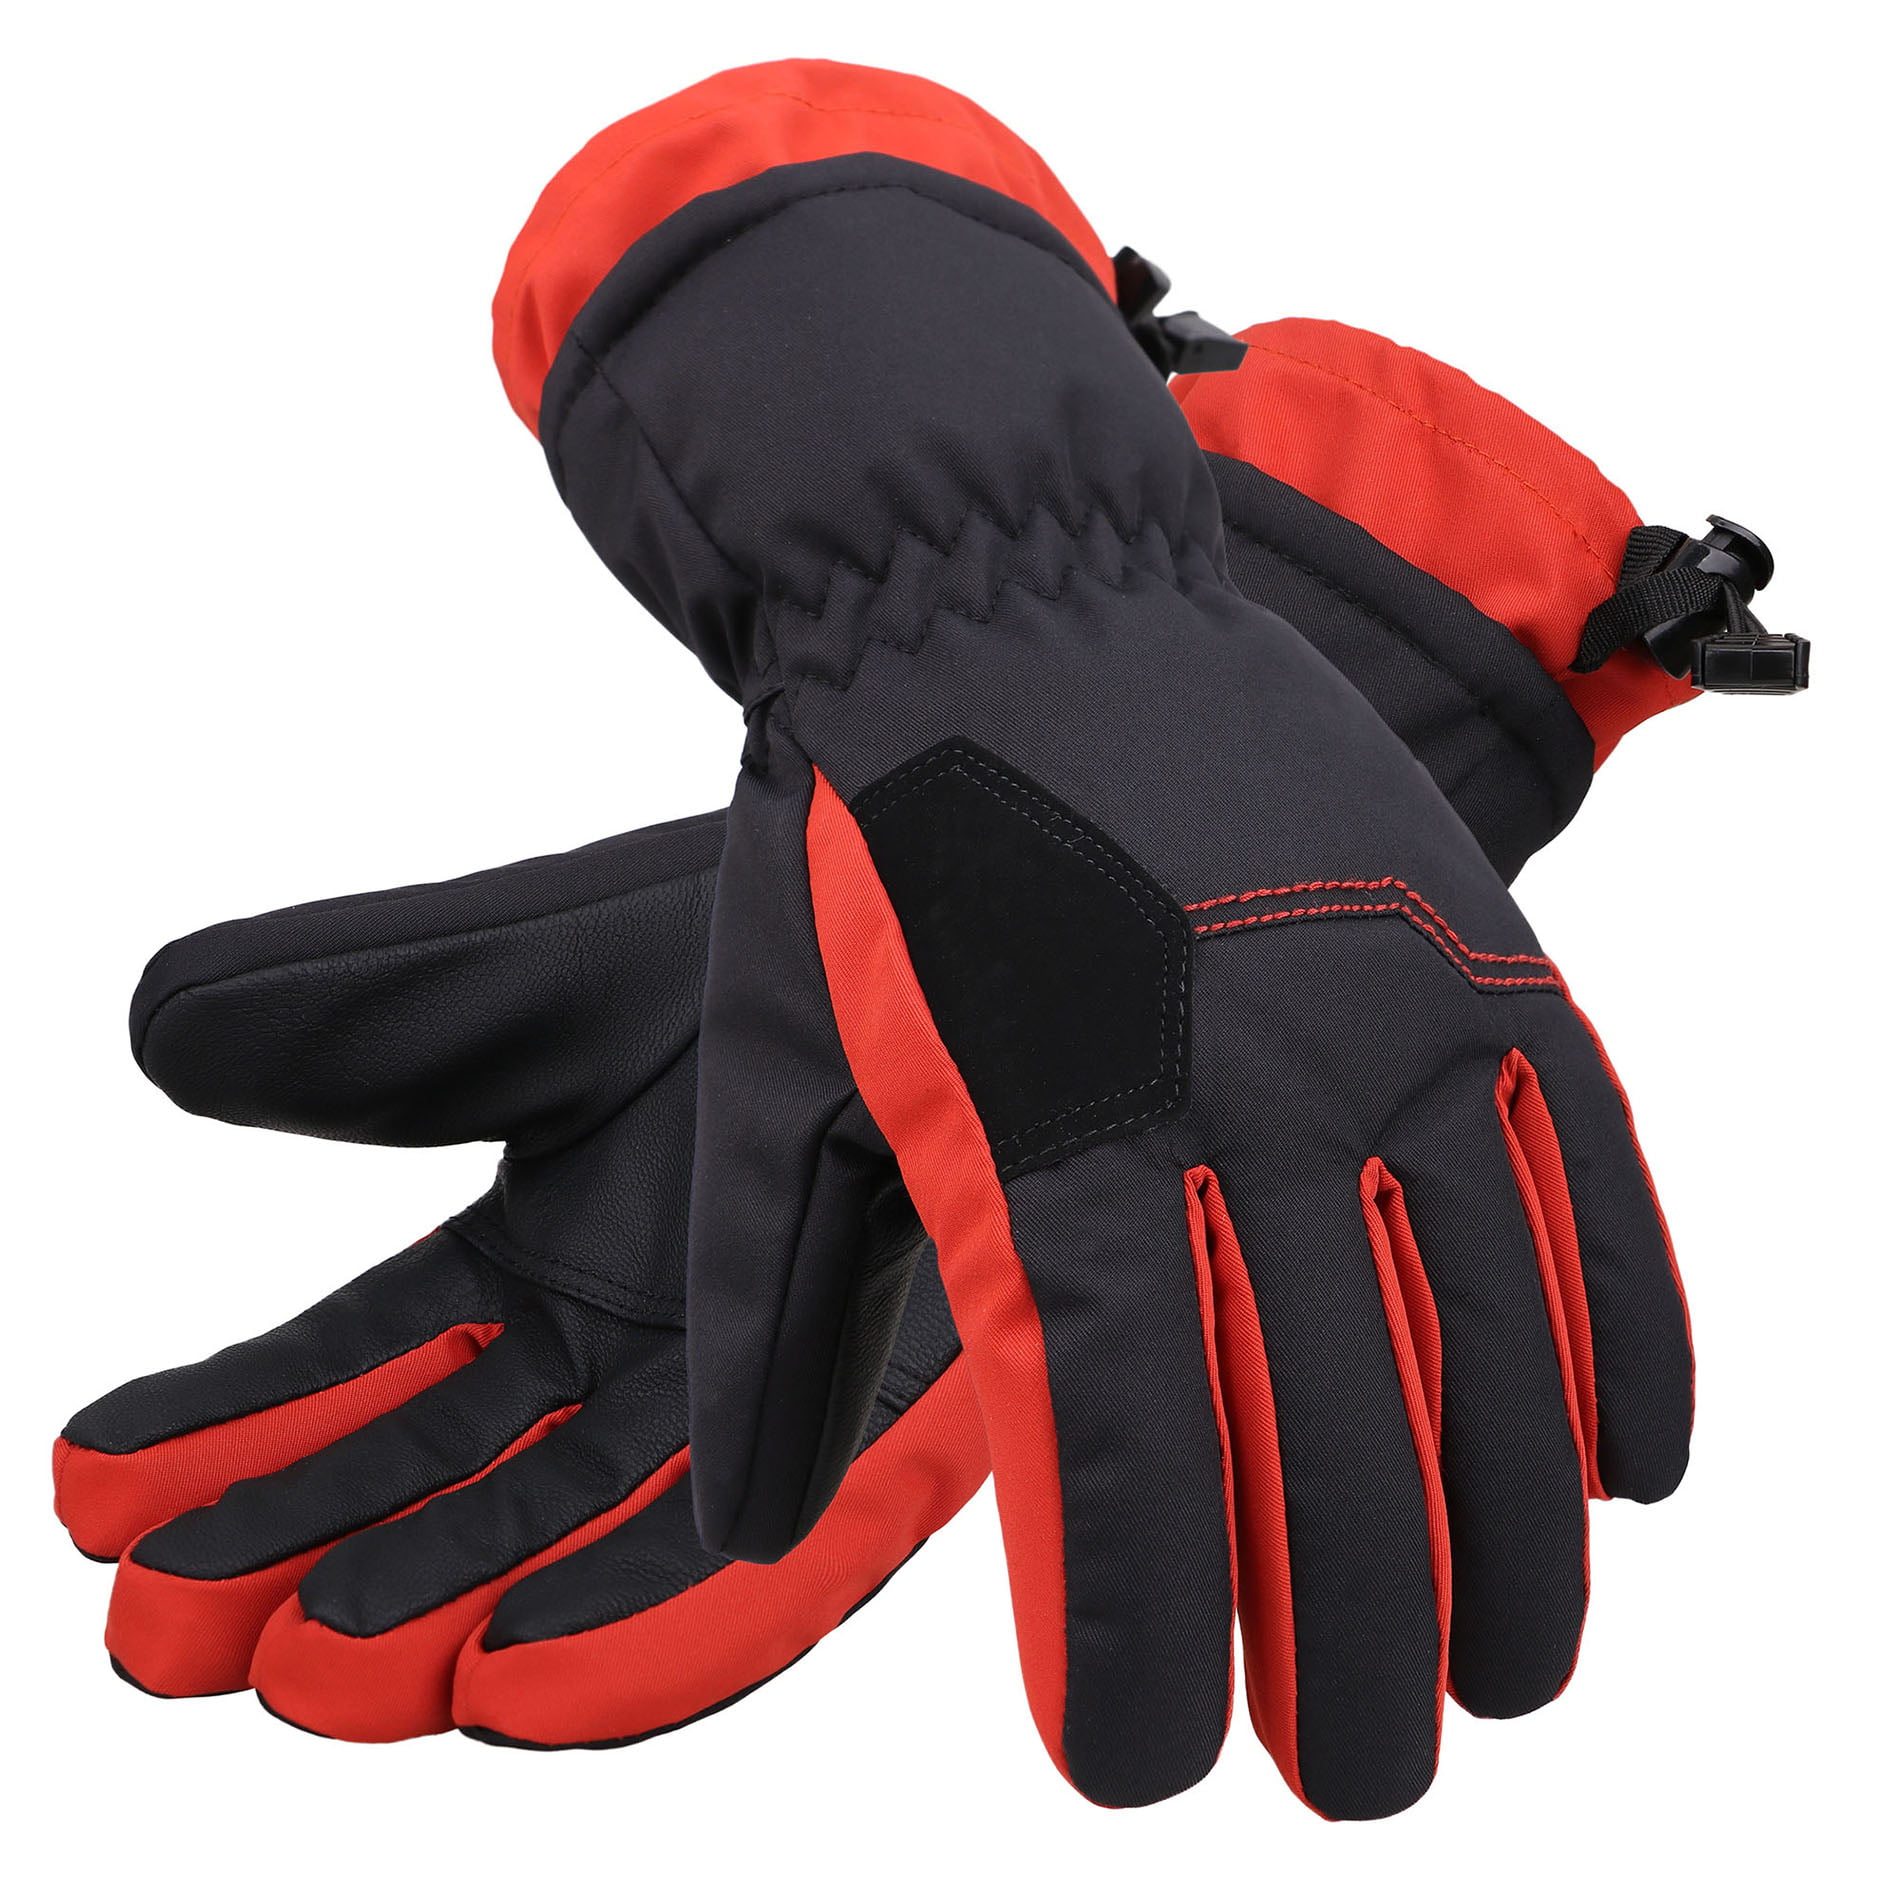 Details about   Snow Gloves Waterproof Warm Winter Snow Mitten for Kids Skiing & Snowboarding 